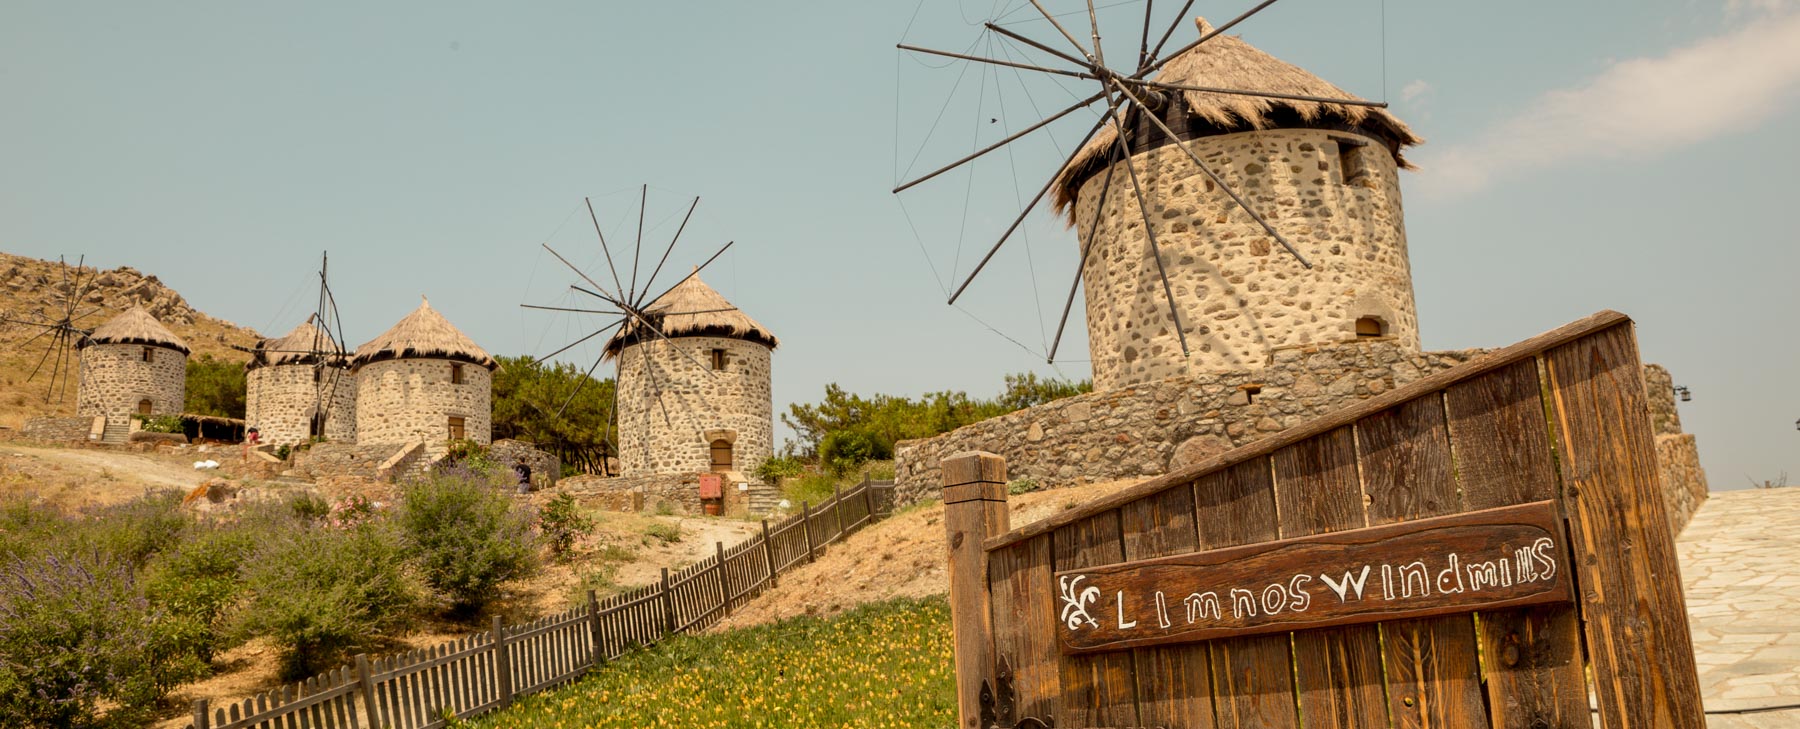 Limnos Windmills